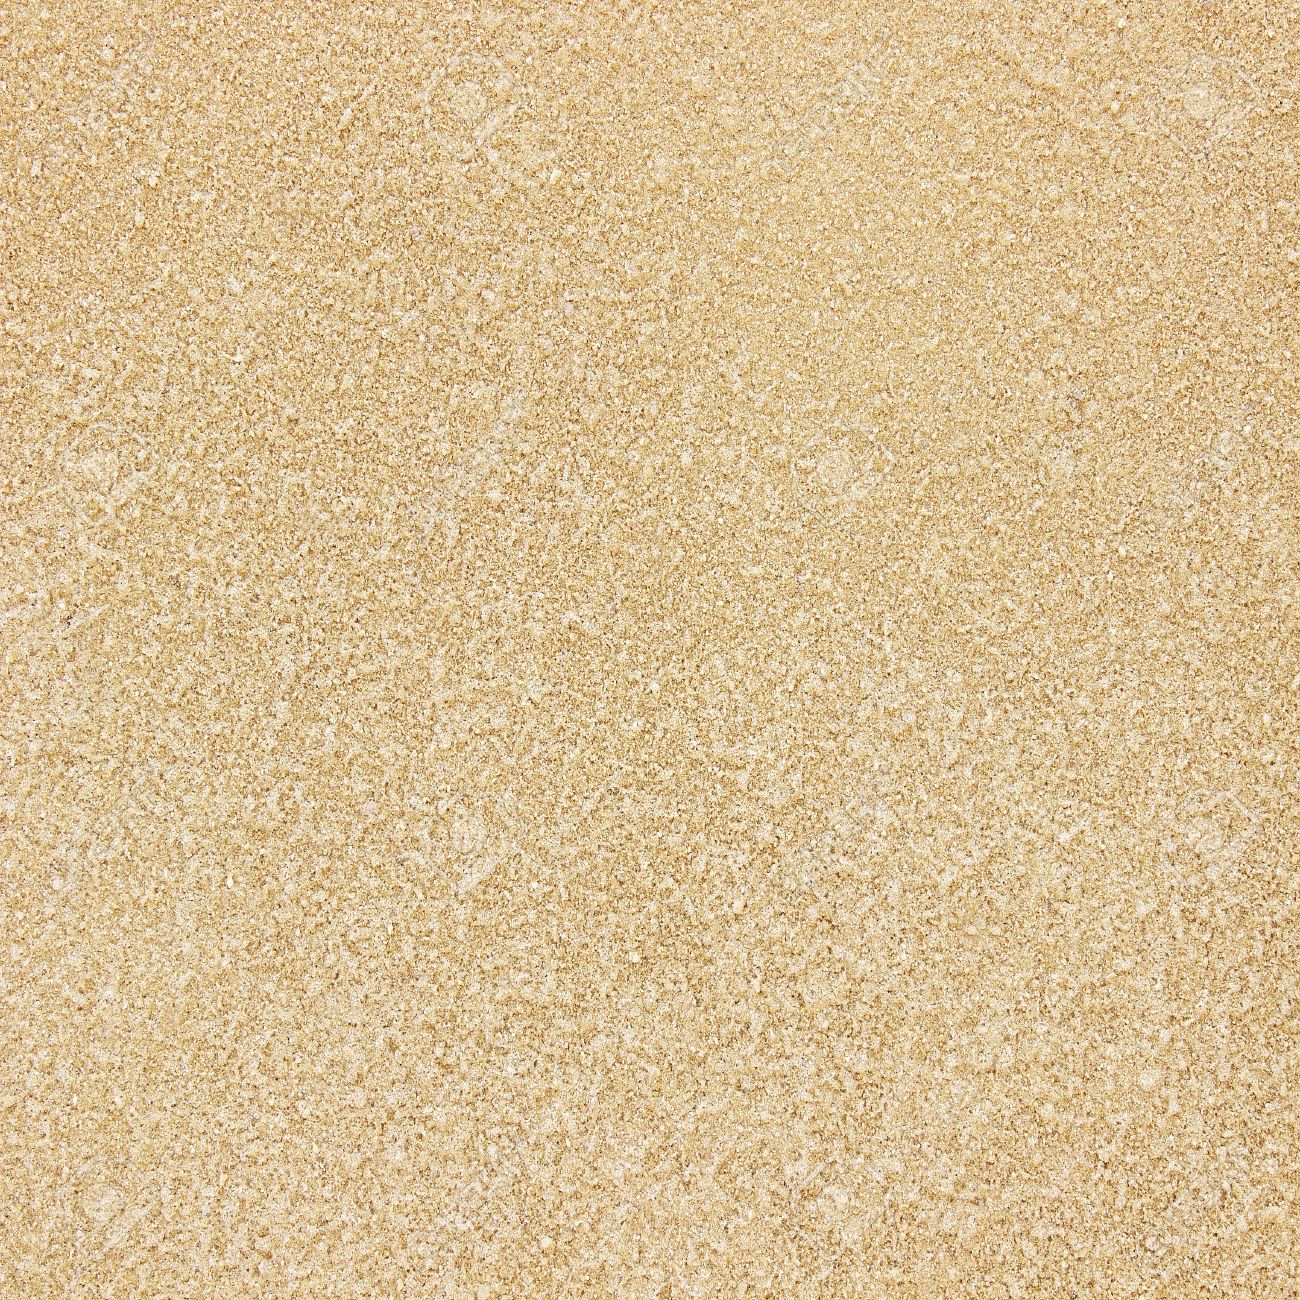 Sandstone Texture Sandstone Texture Background Texture Of